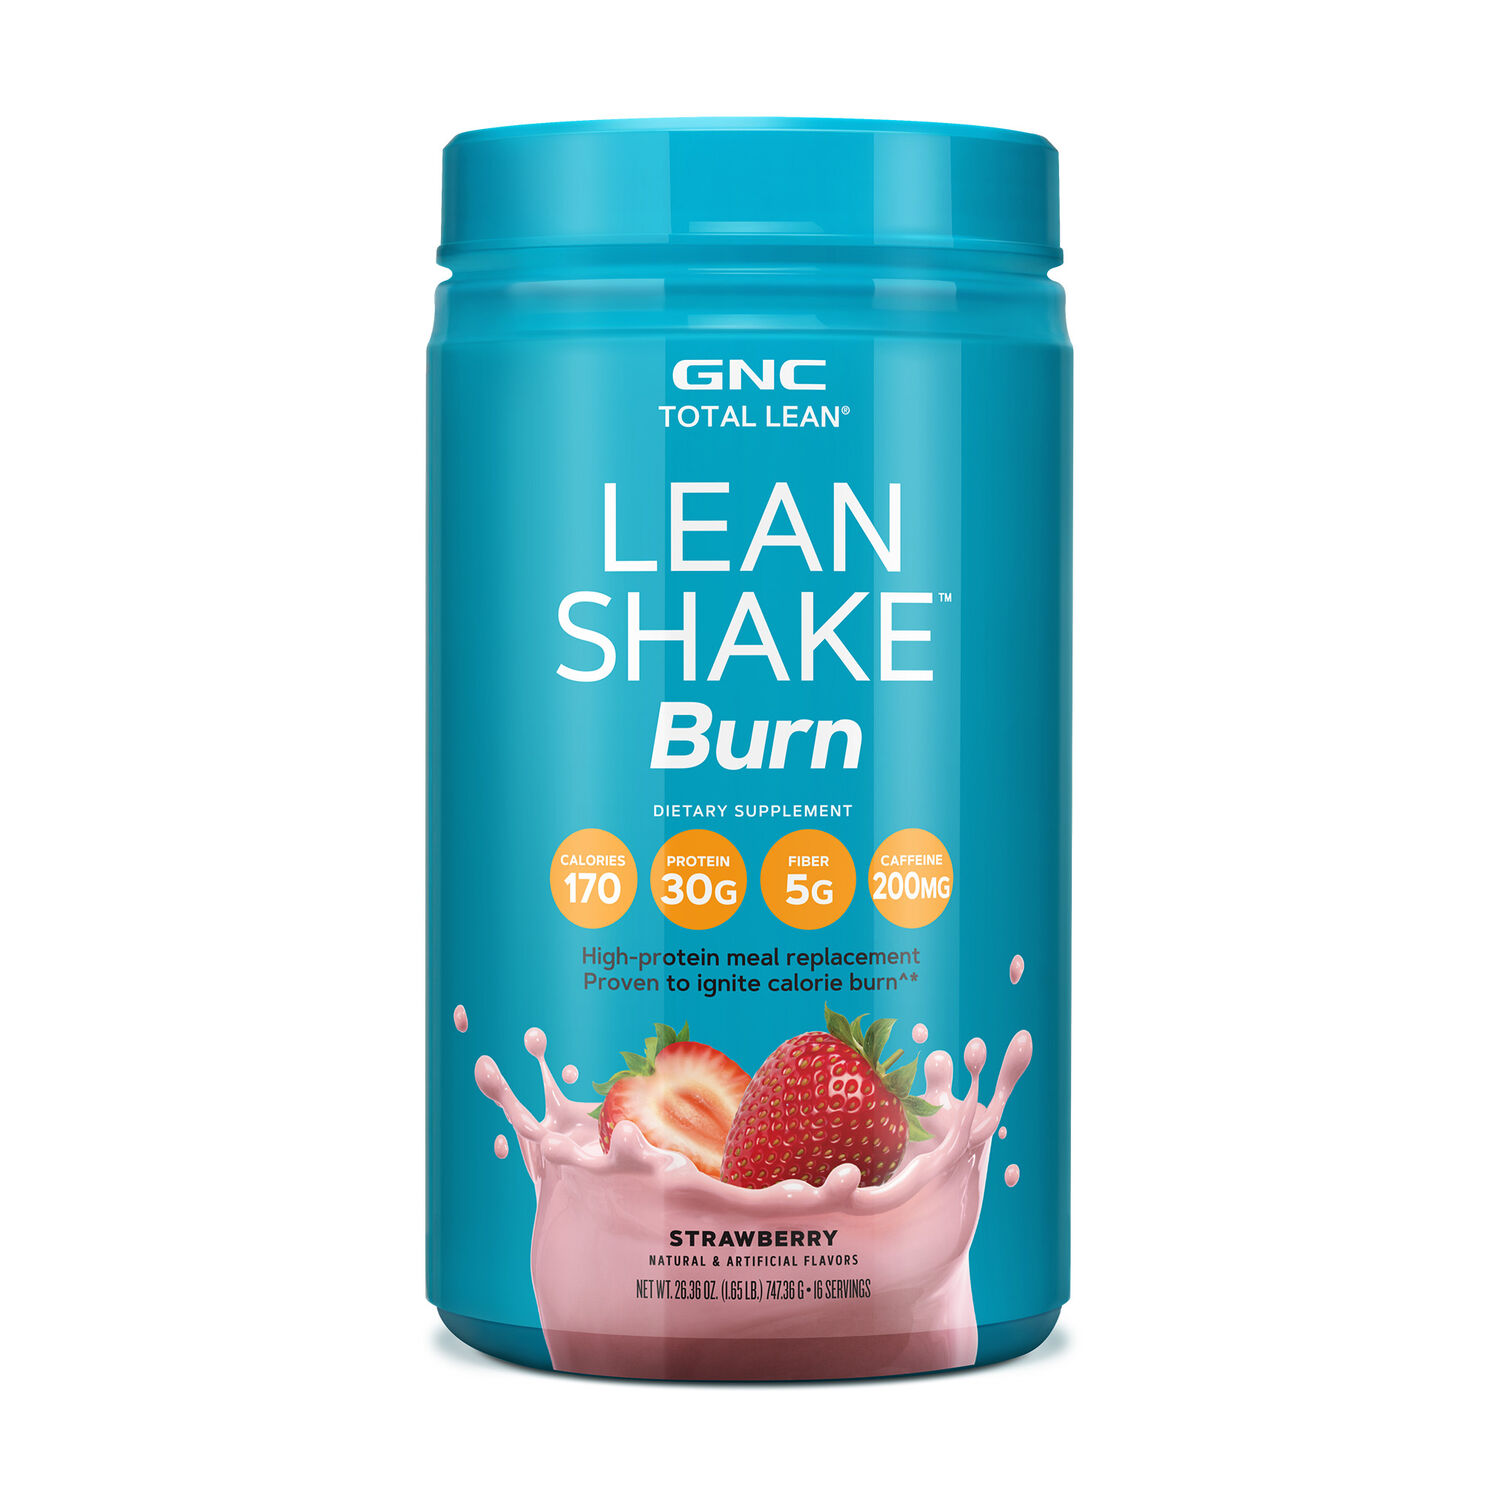 GNC Total Lean Lean Shake Burn - Strawberry (16 Servings) - 1.65 lbs.